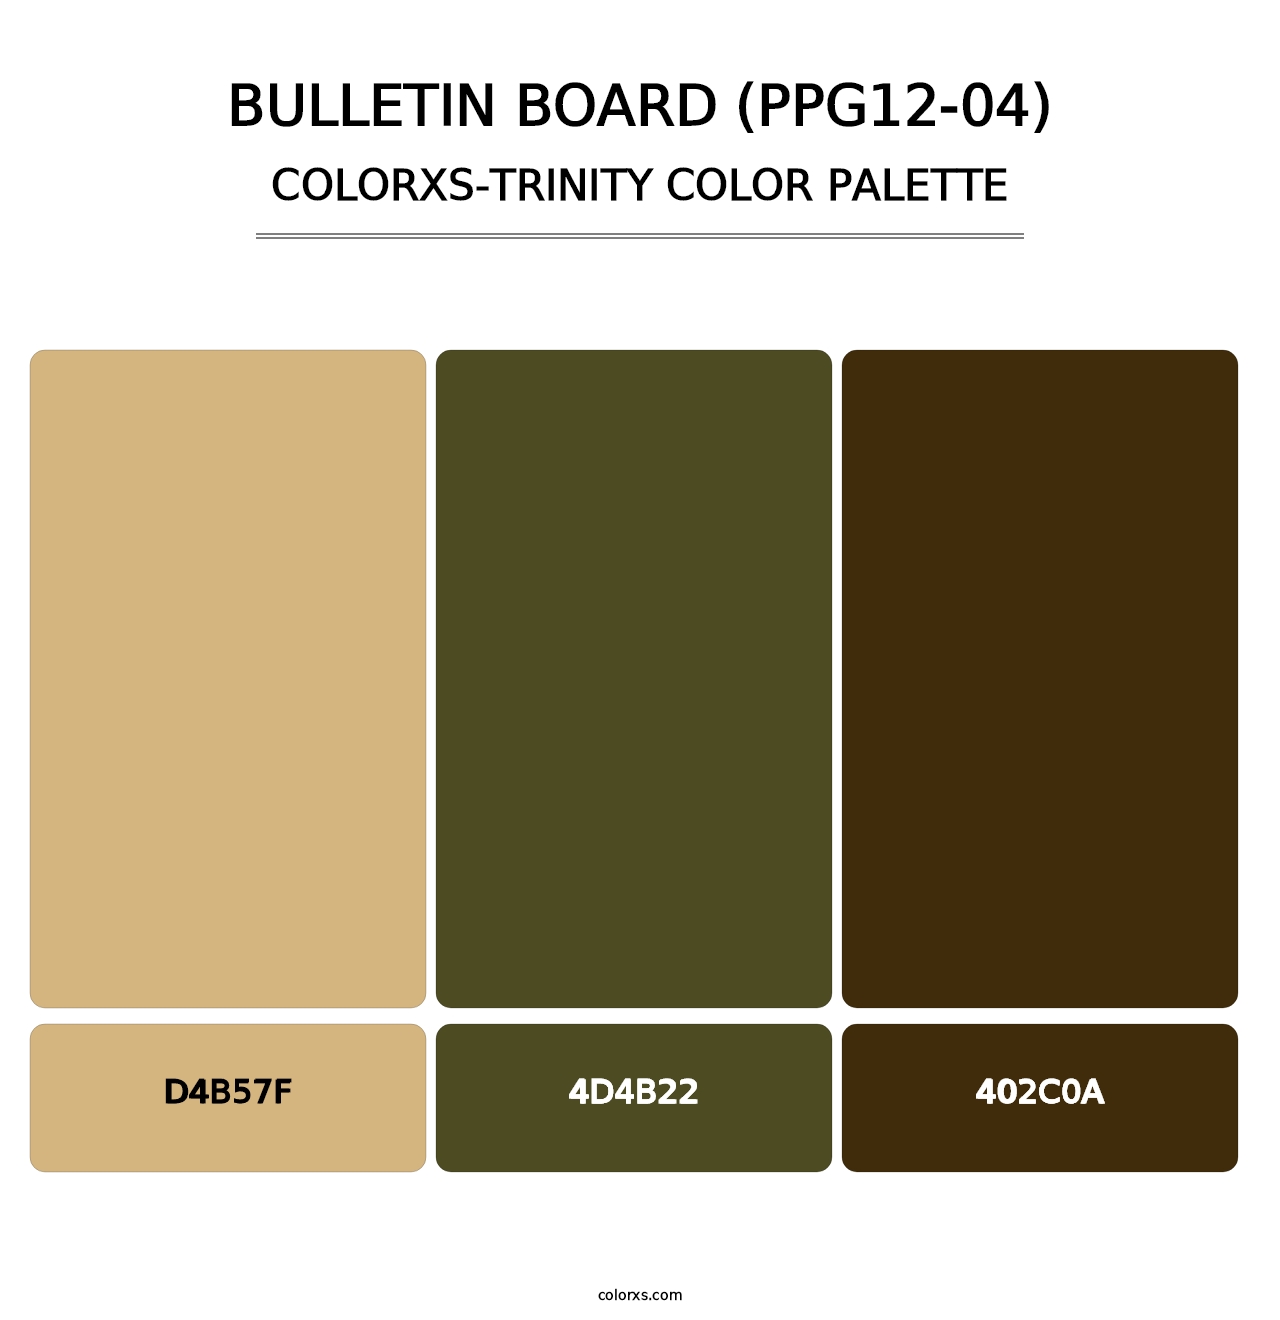 Bulletin Board (PPG12-04) - Colorxs Trinity Palette